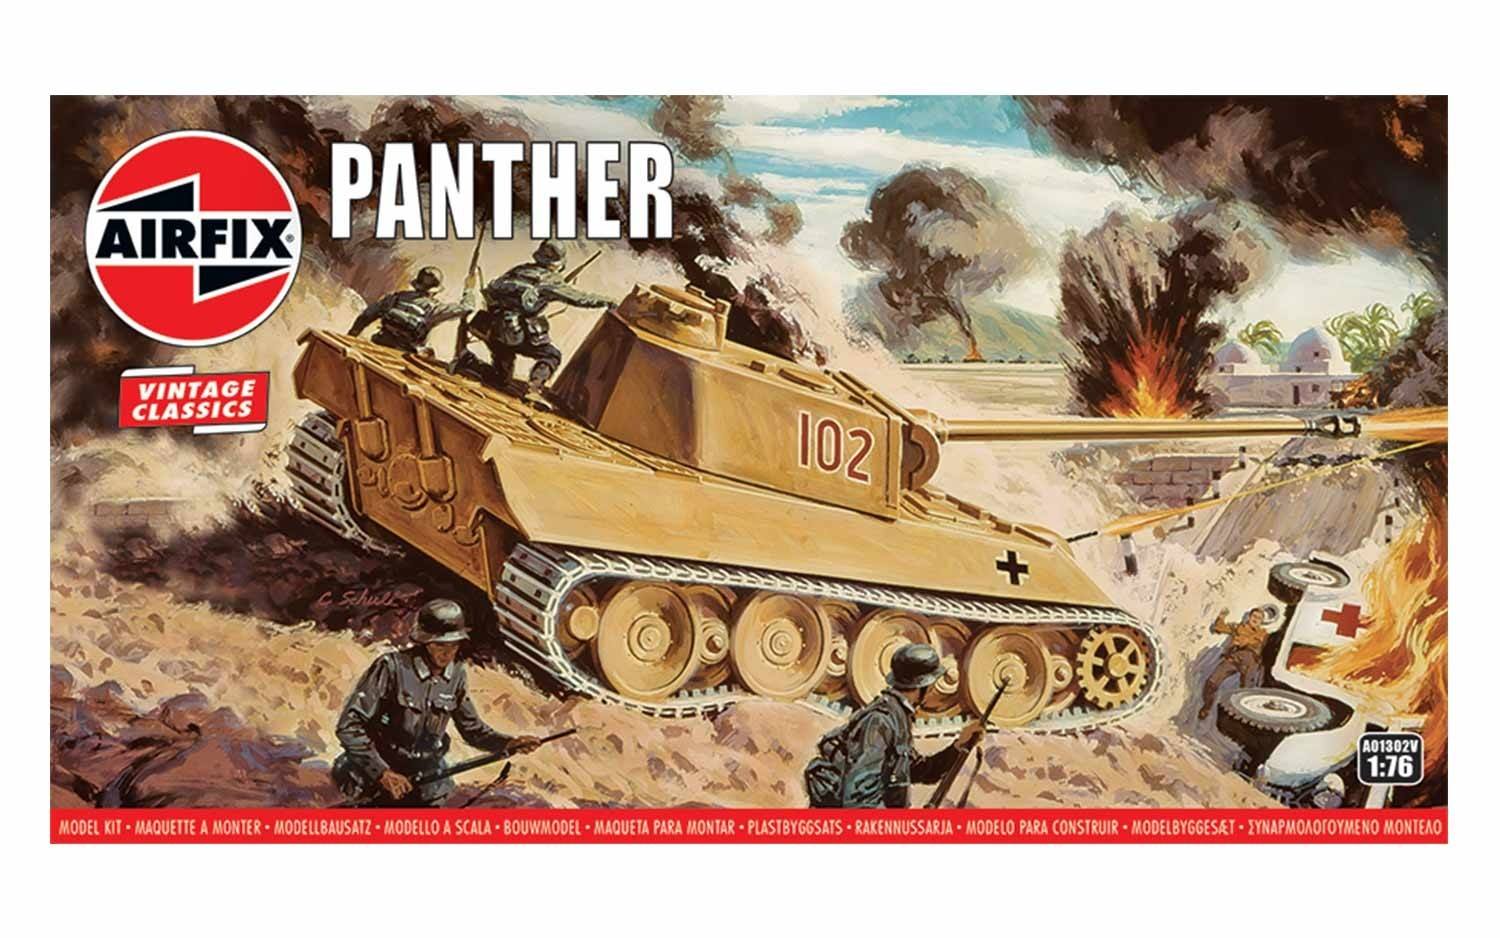 Vintage Classics - Panther Tank